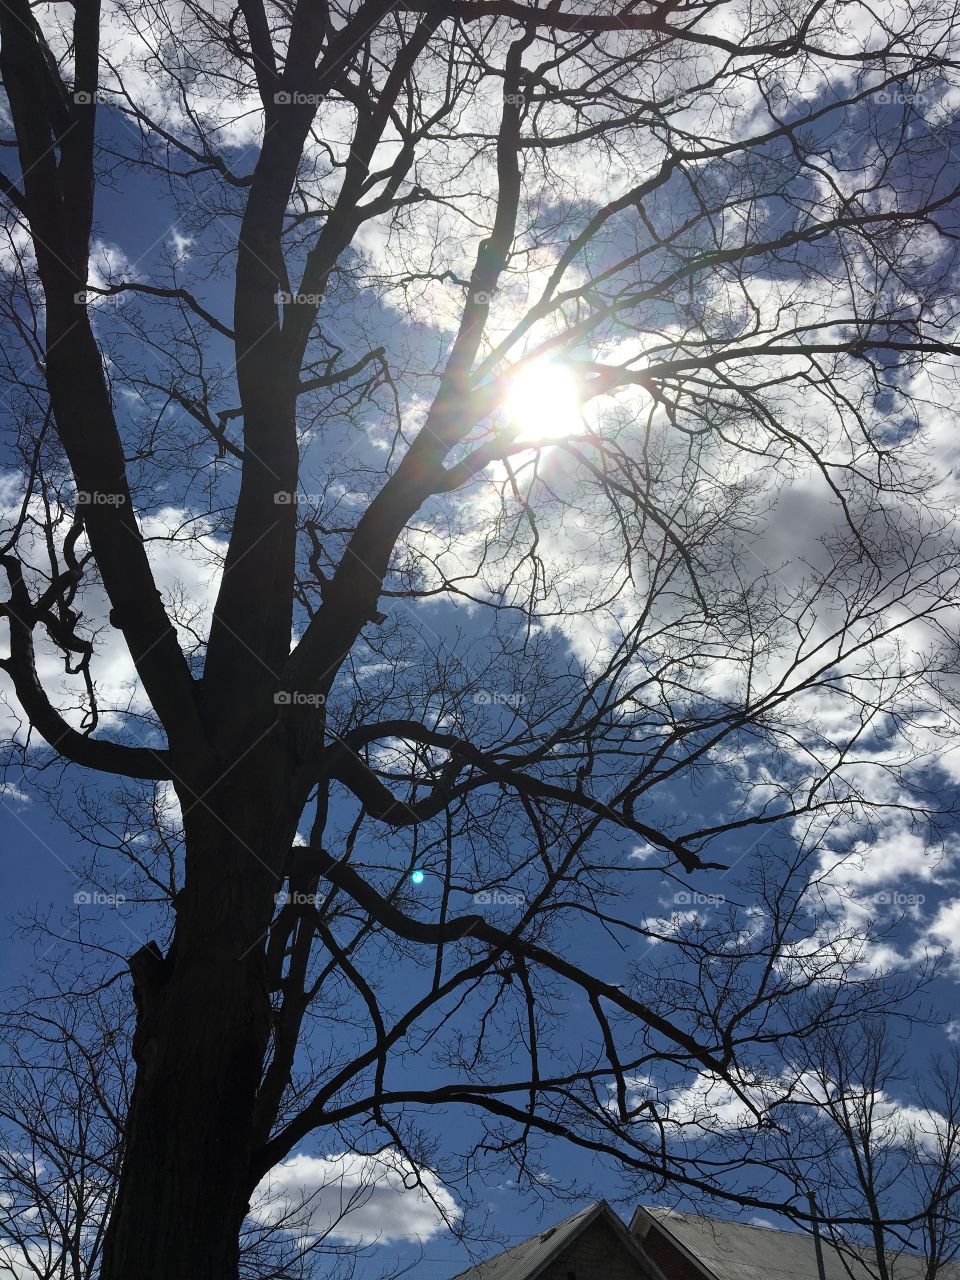 Blue skies, clouds & sun seen through the tree